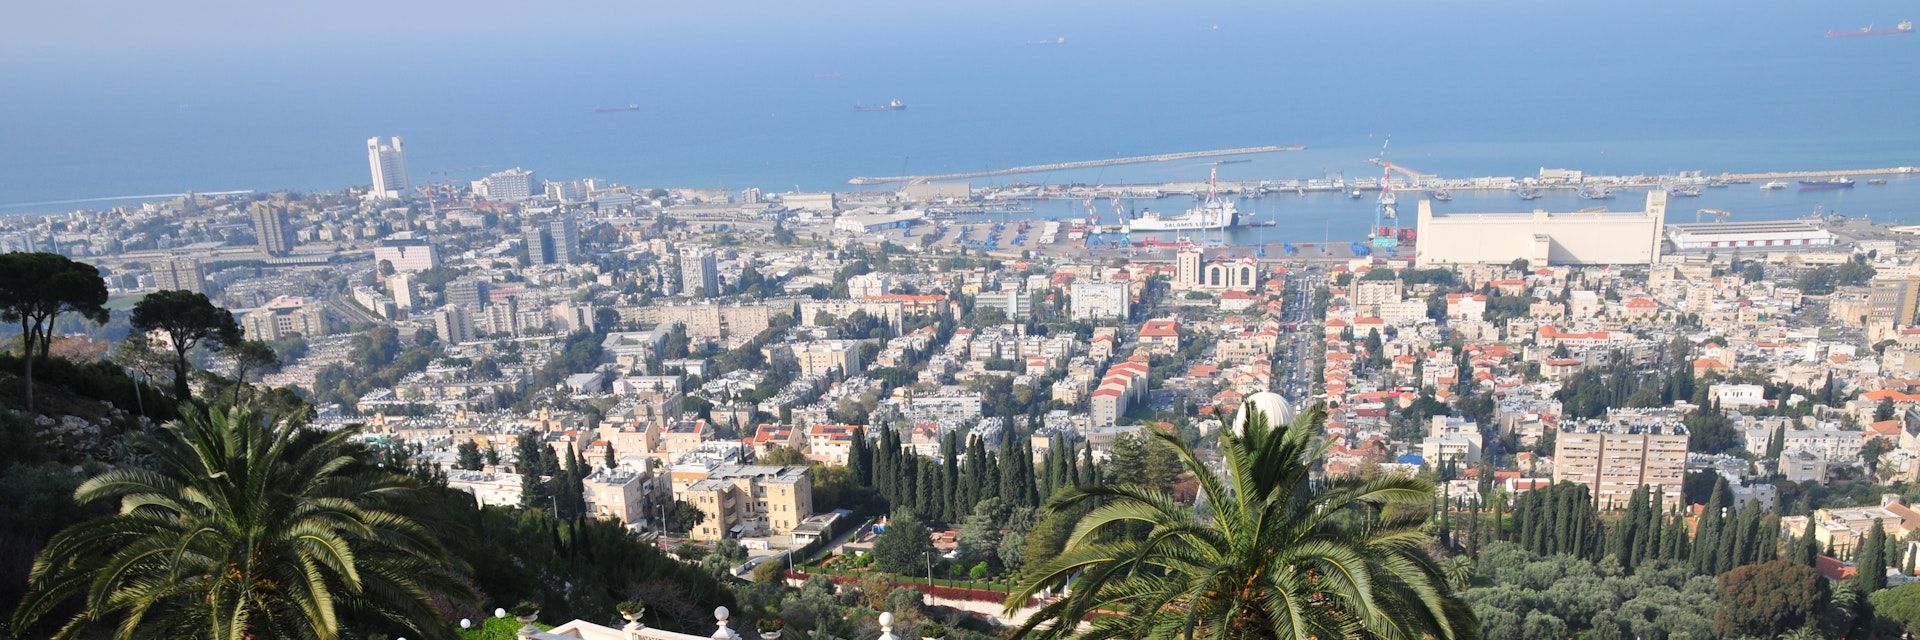 Israel, Haifa, The gardens of the Bahai Shrine downtown Haifa in the background